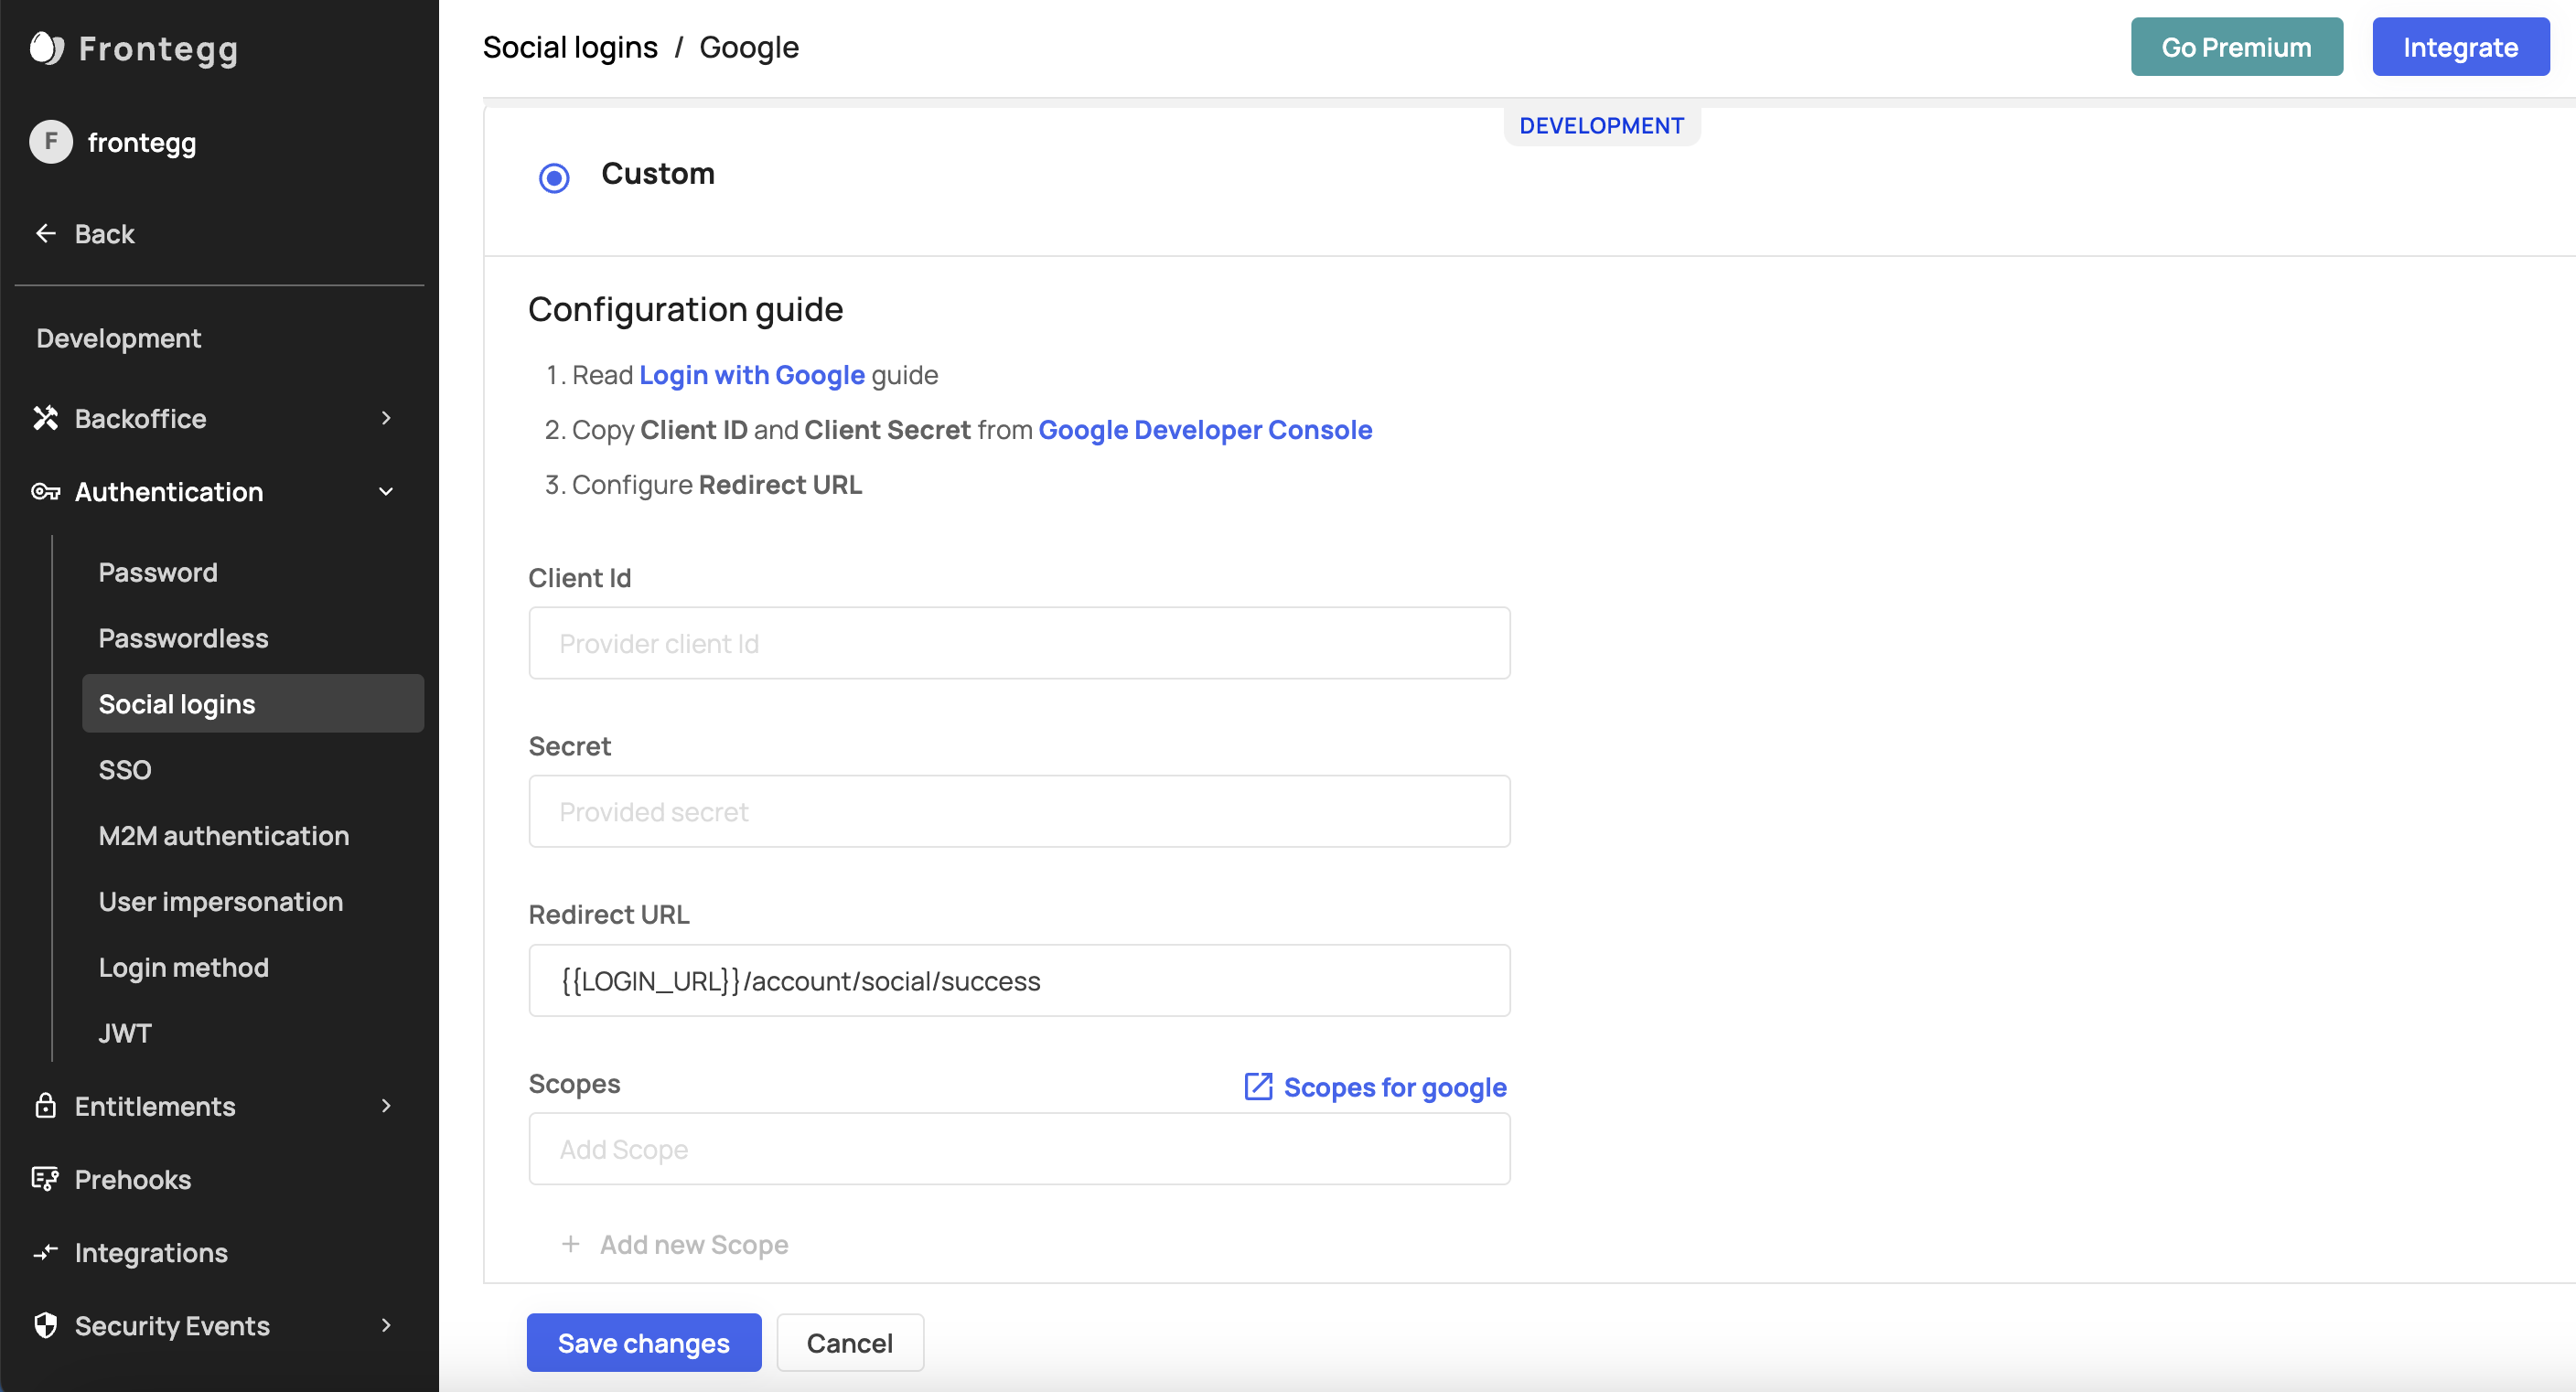 Customizing Scopes for Google Social Login